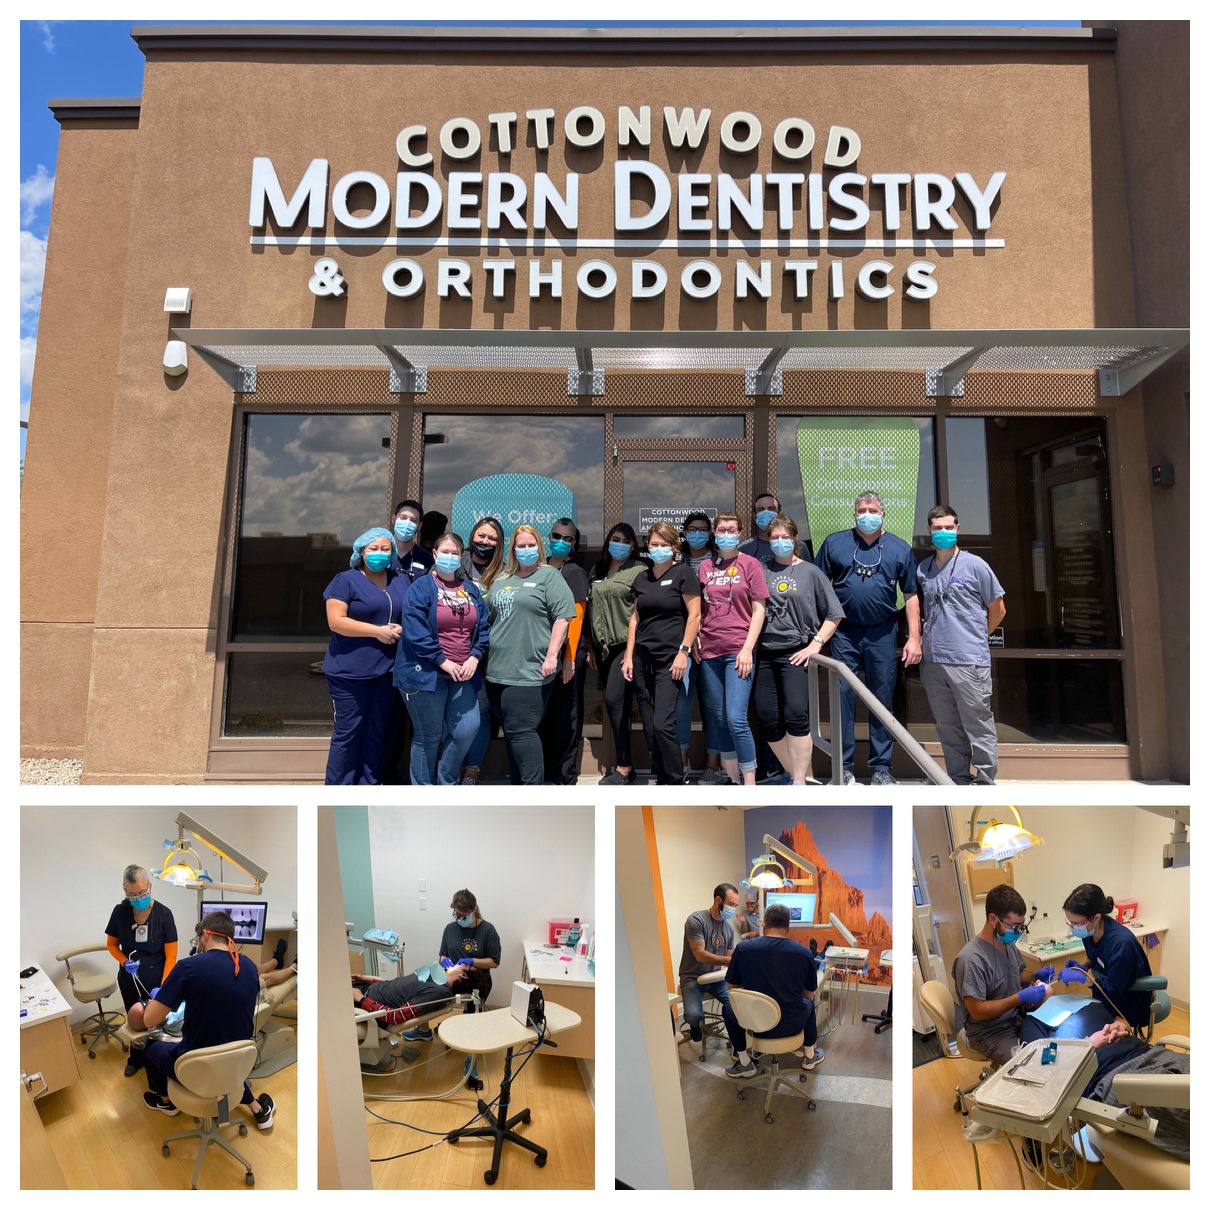 Cottonwood Modern Dentistry and Orthodontics